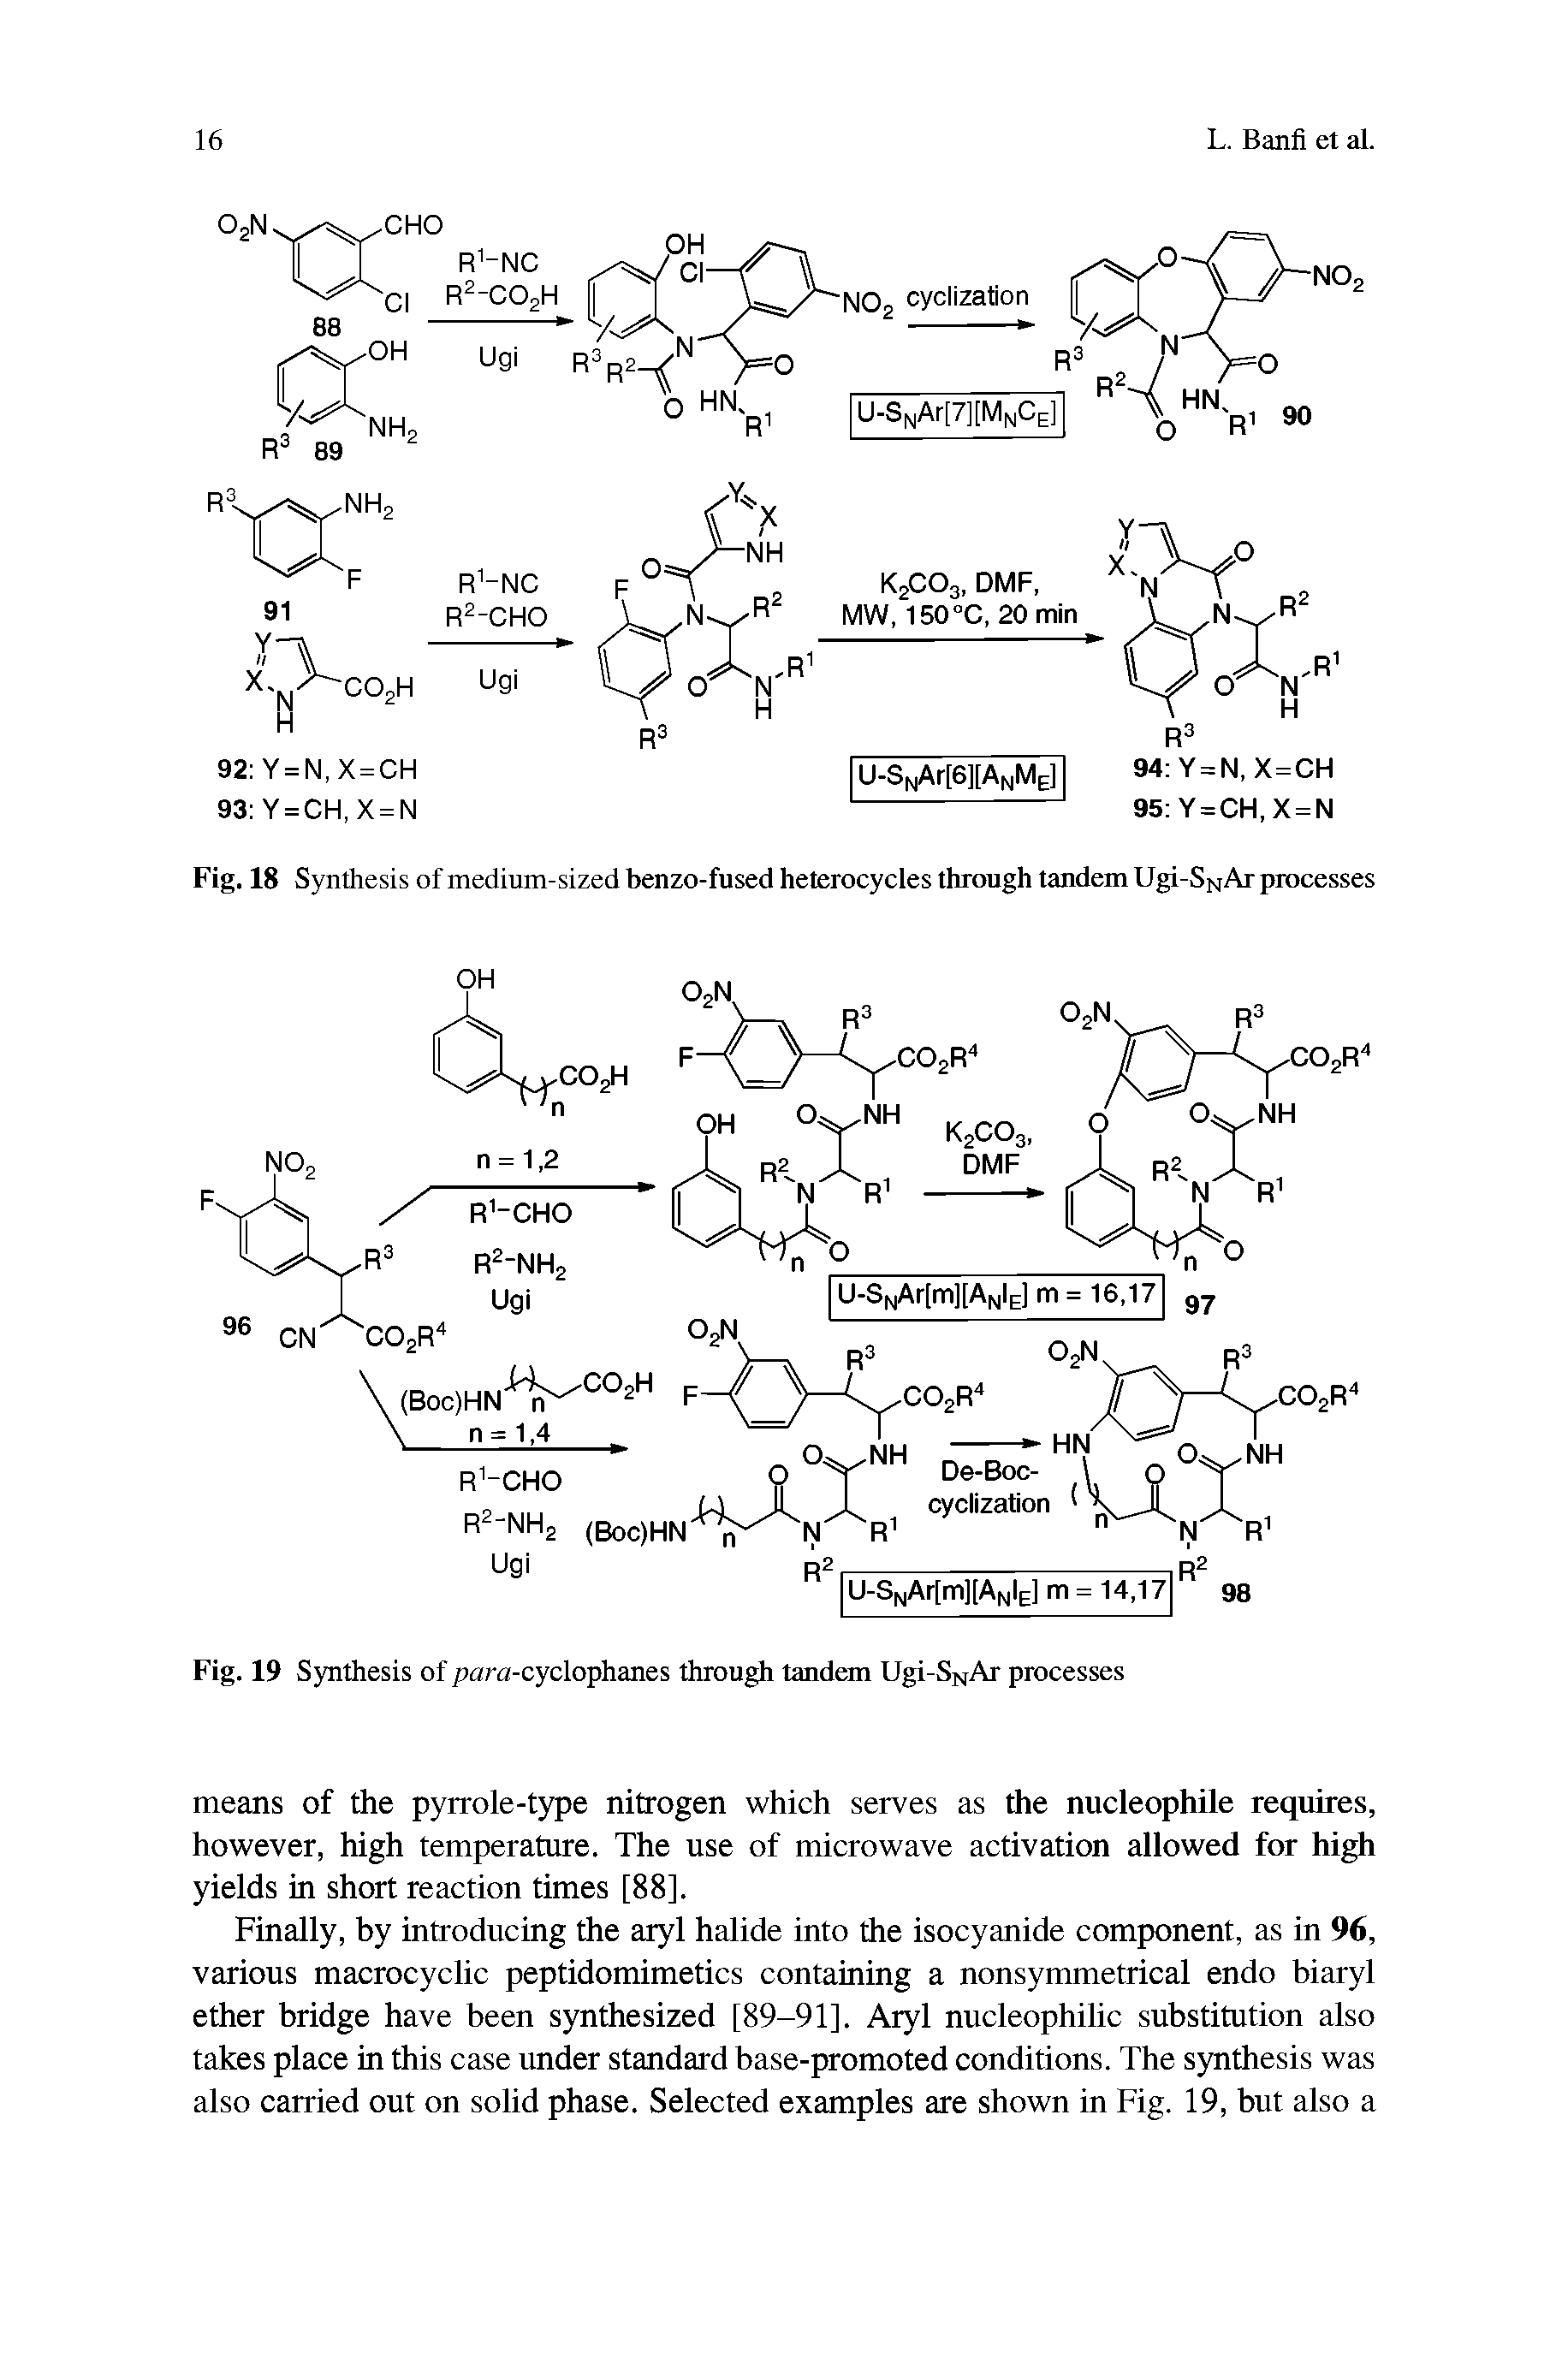 Fig. 19 Synthesis of para-cyclophanes through tandem Ugi-SNAr processes...